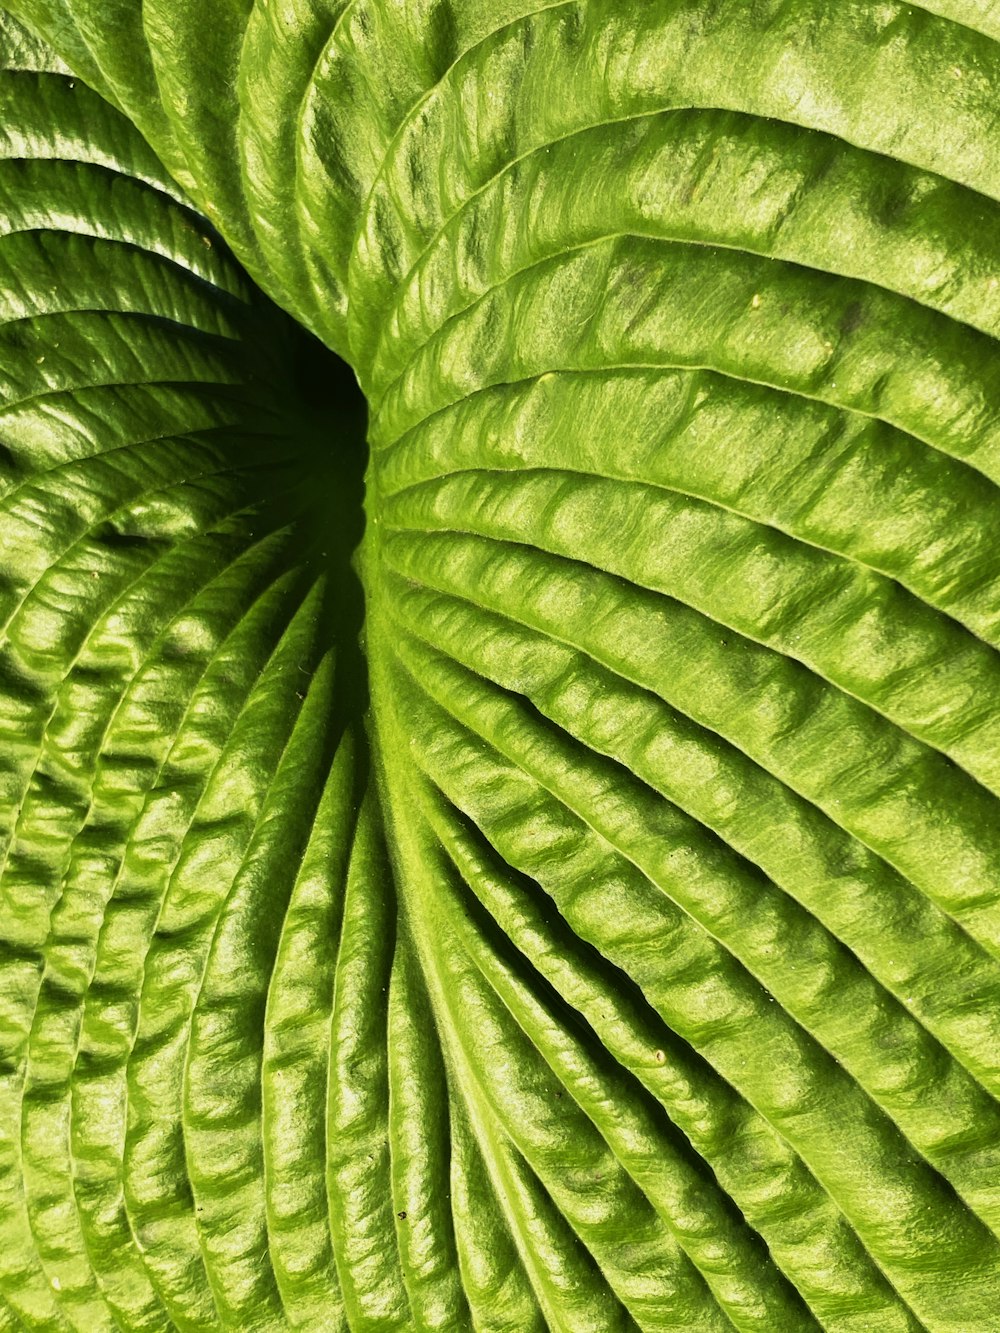 close up photo of green leaf